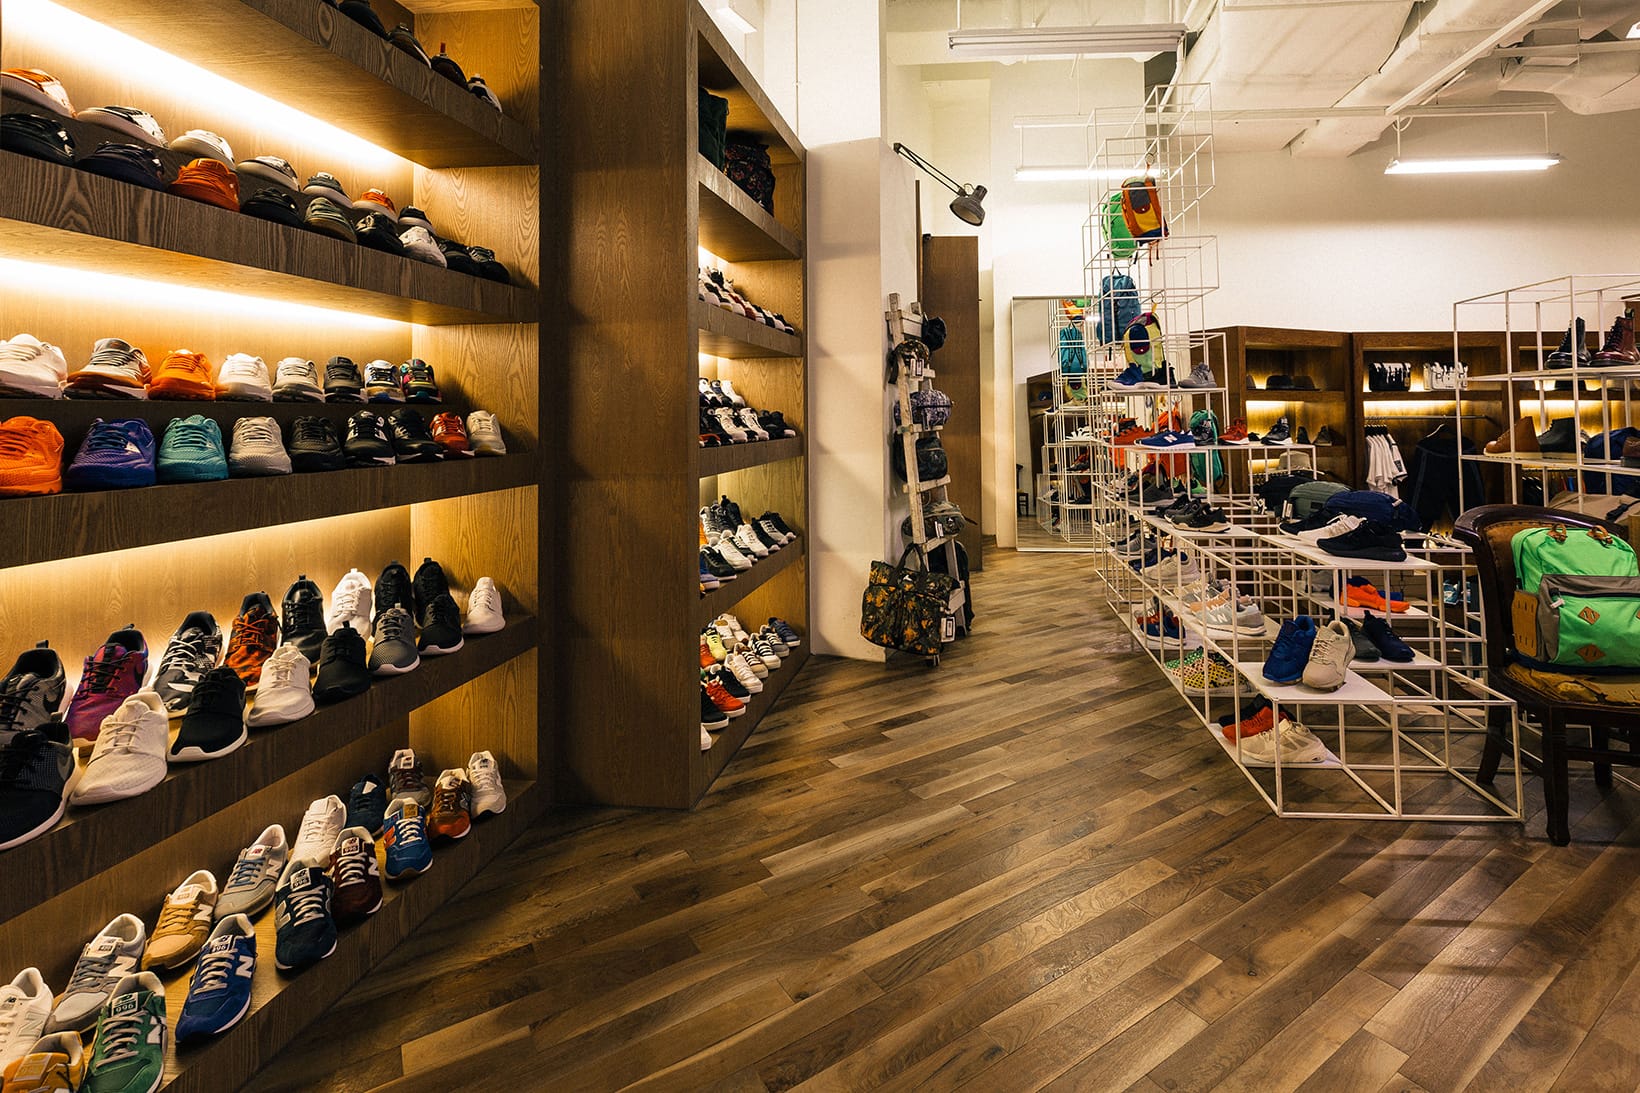 Sneakers магазин кроссовок. Дизайн магазина кроссовок. Кроссовки внутри. Дизайн магазина с кроссовками. Дизайн для кроссовки магазина.